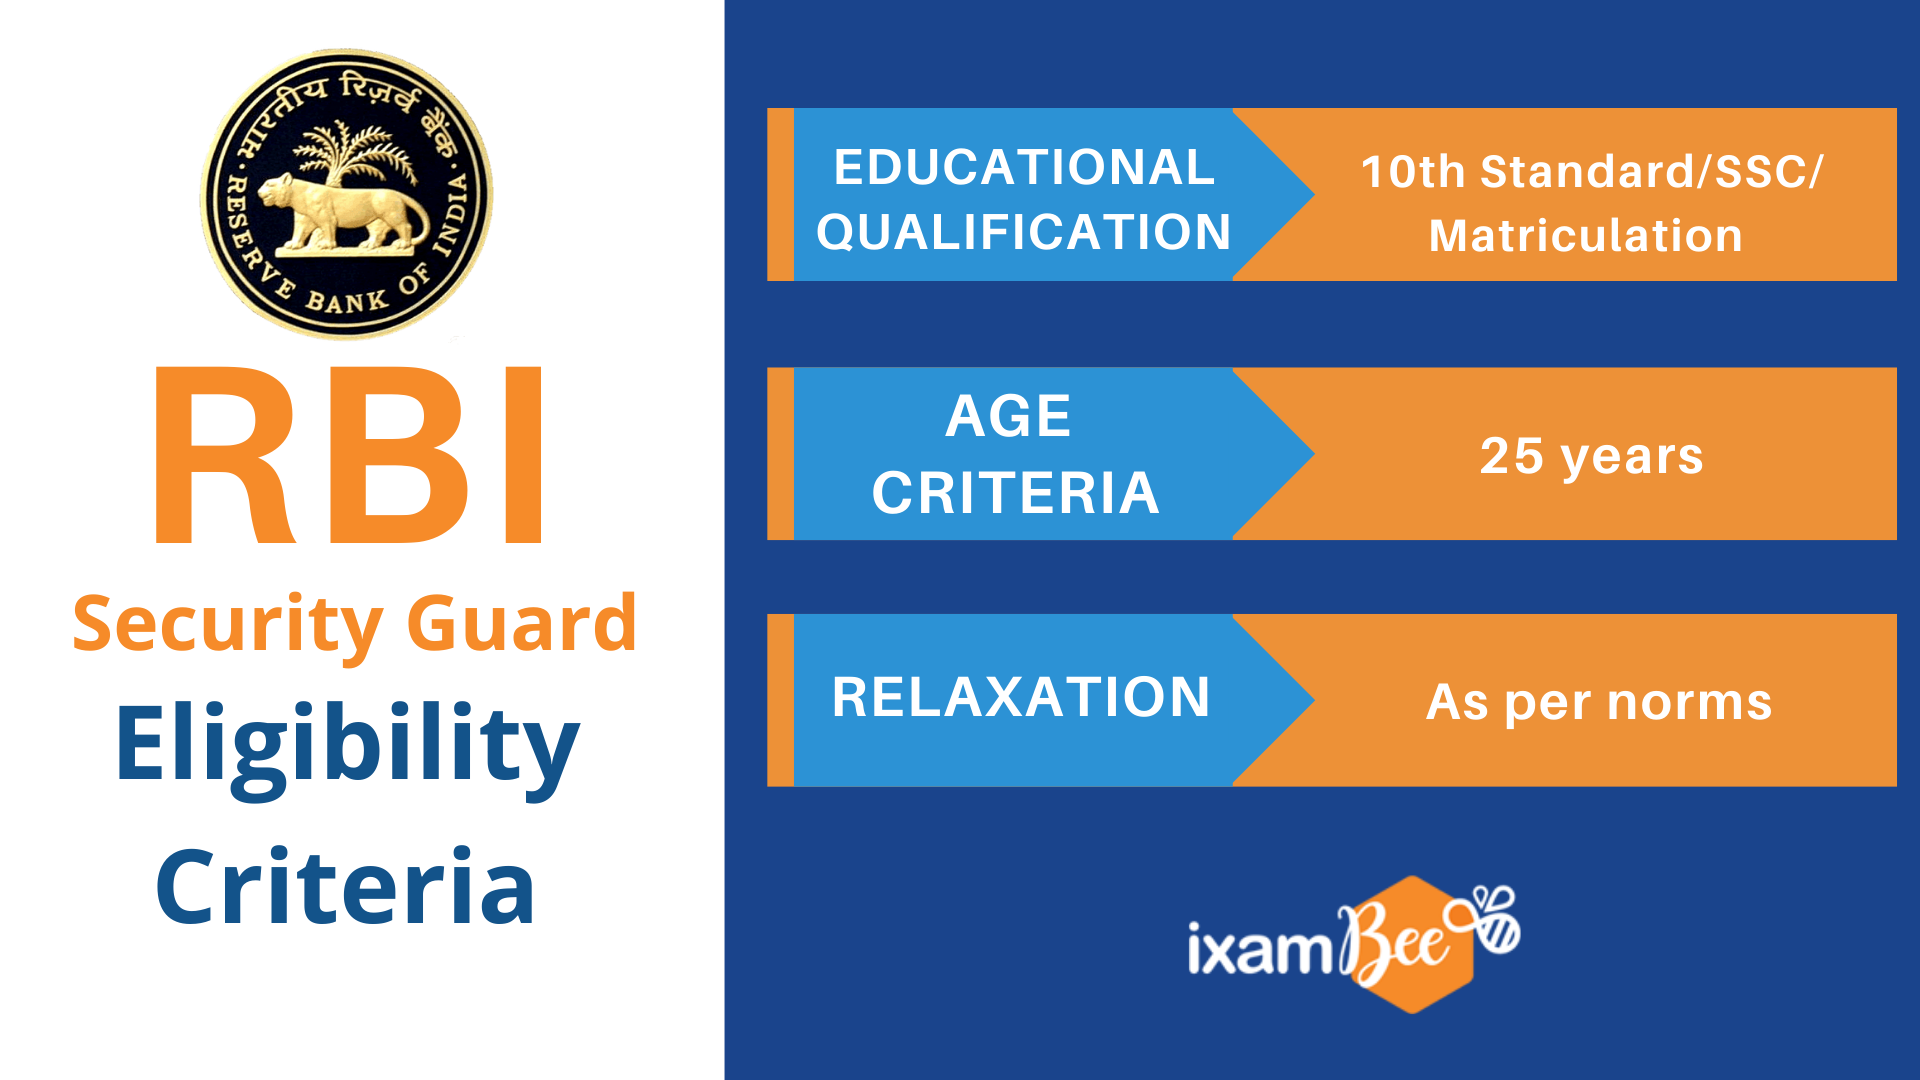 RBI Security Guard Eligibility Criteria